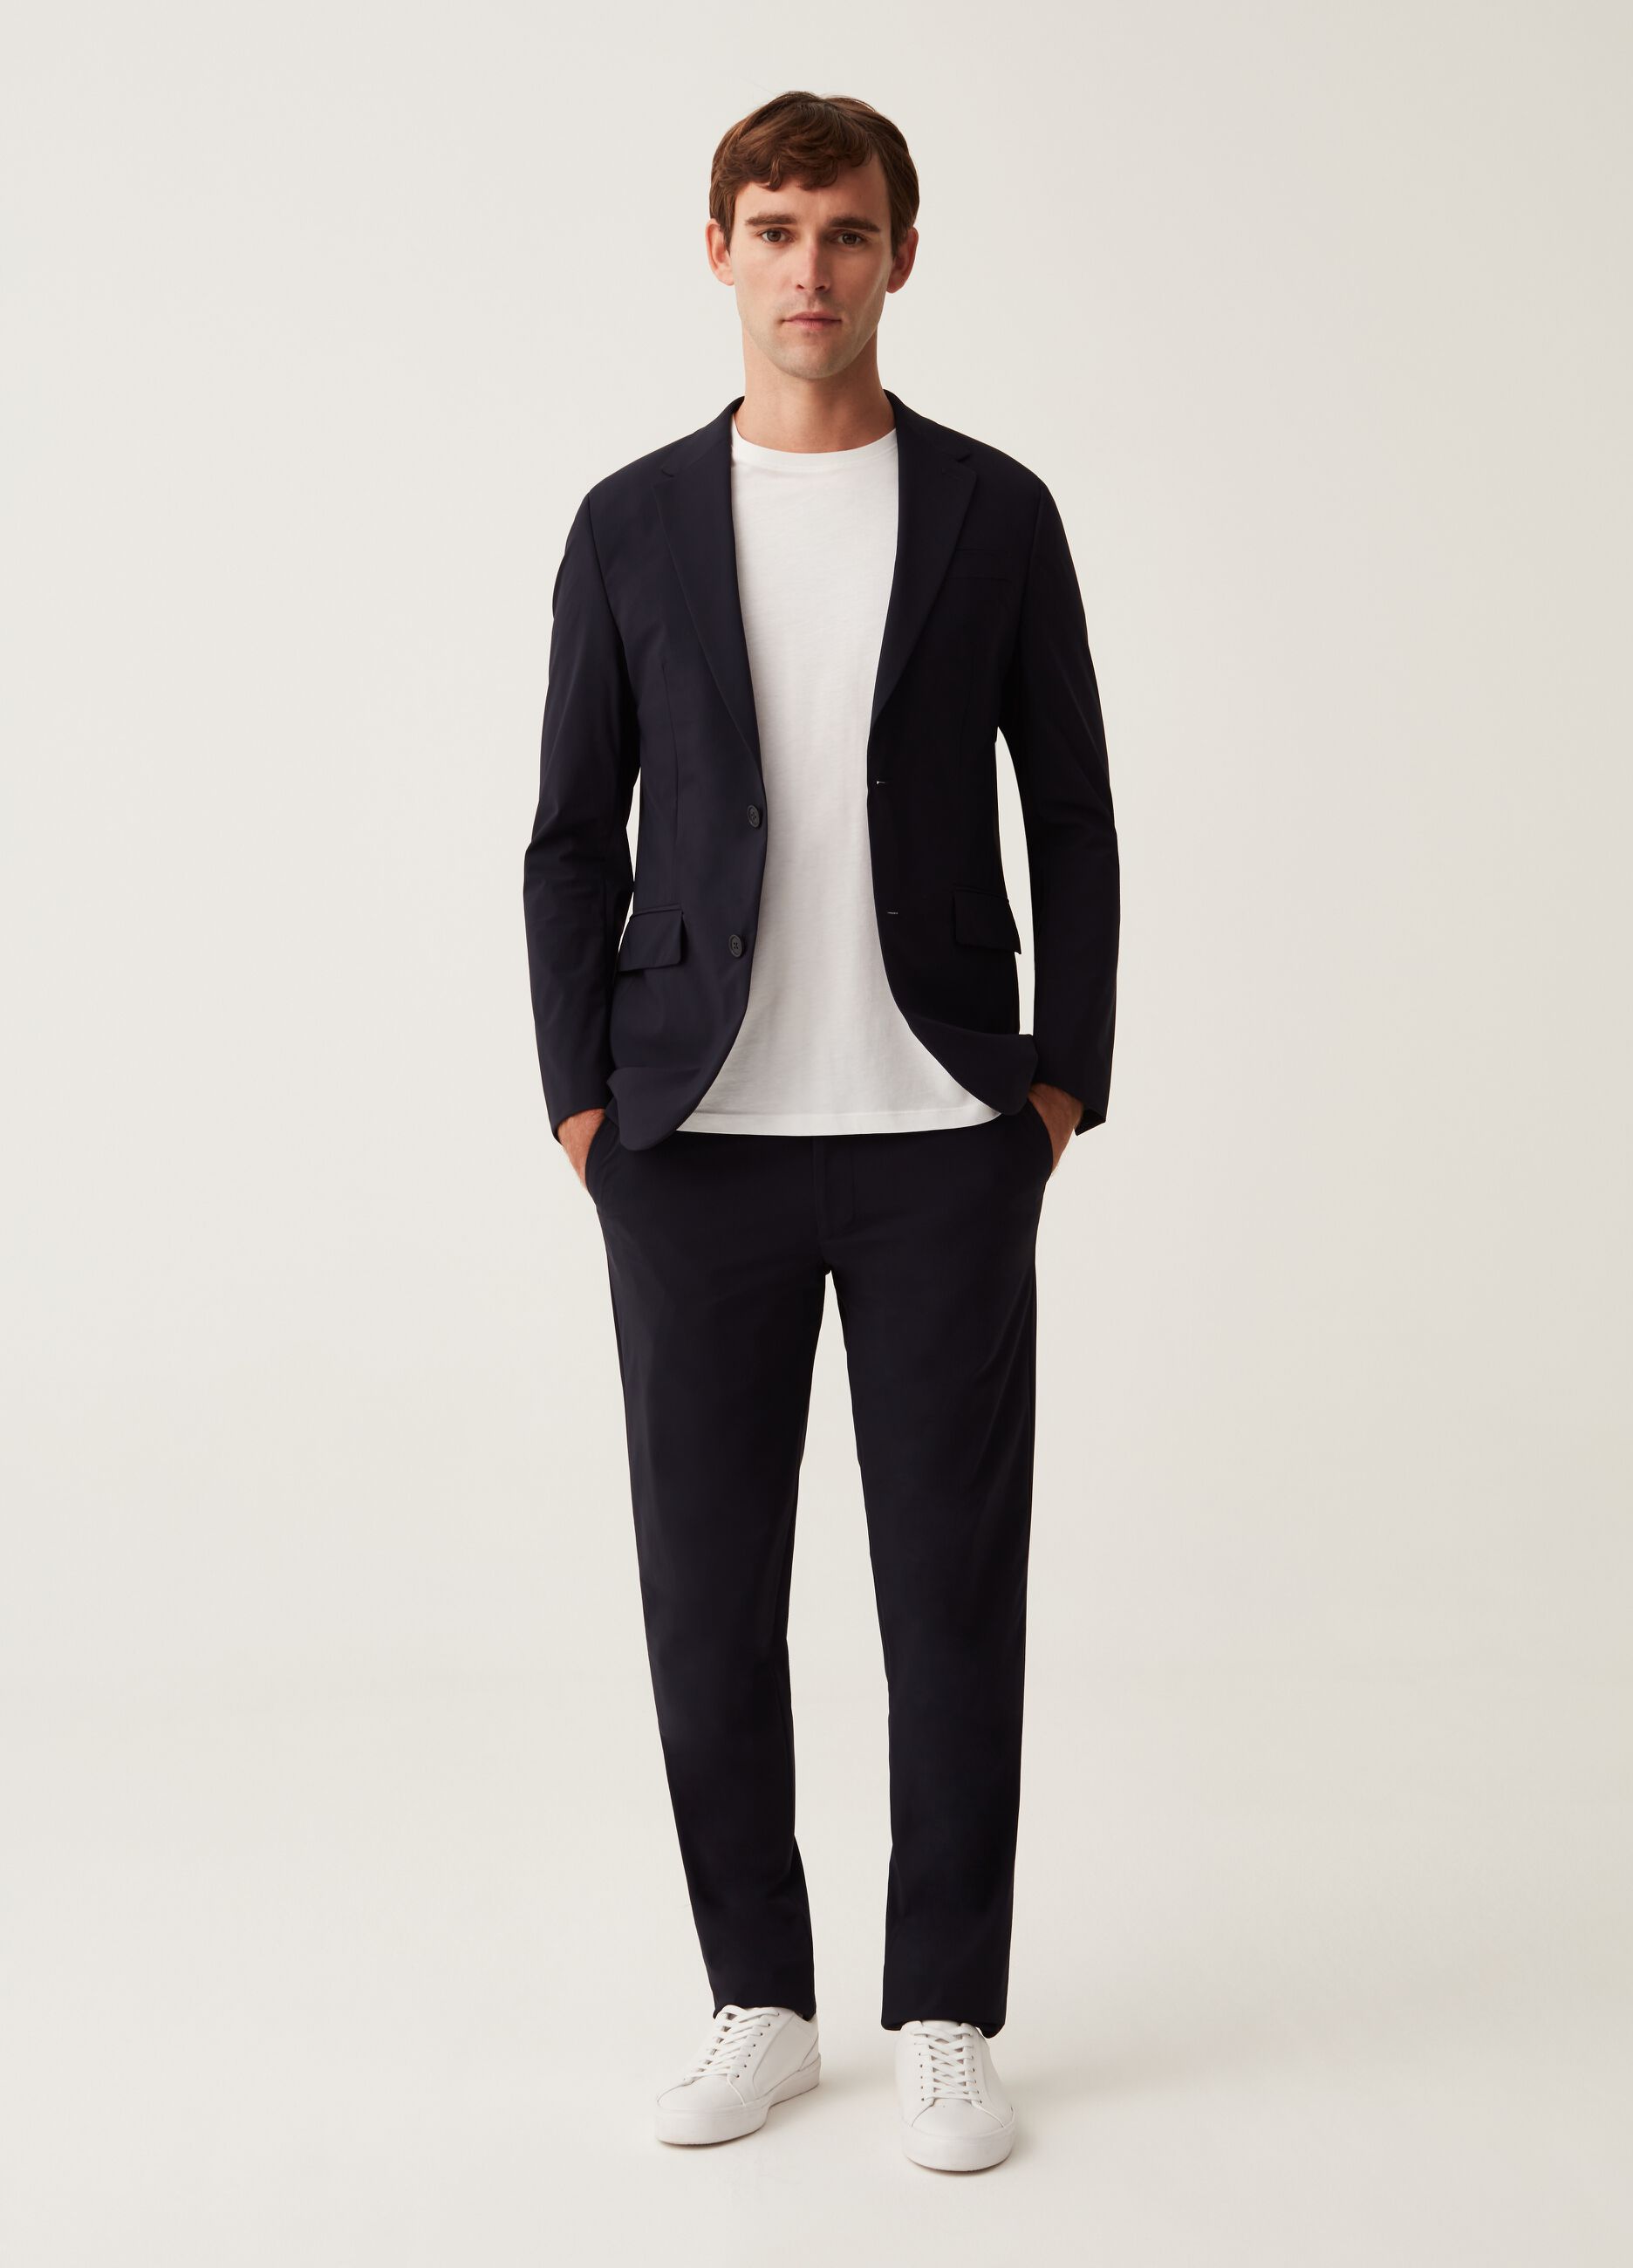 Slim-fit blazer in navy blue technical fabric